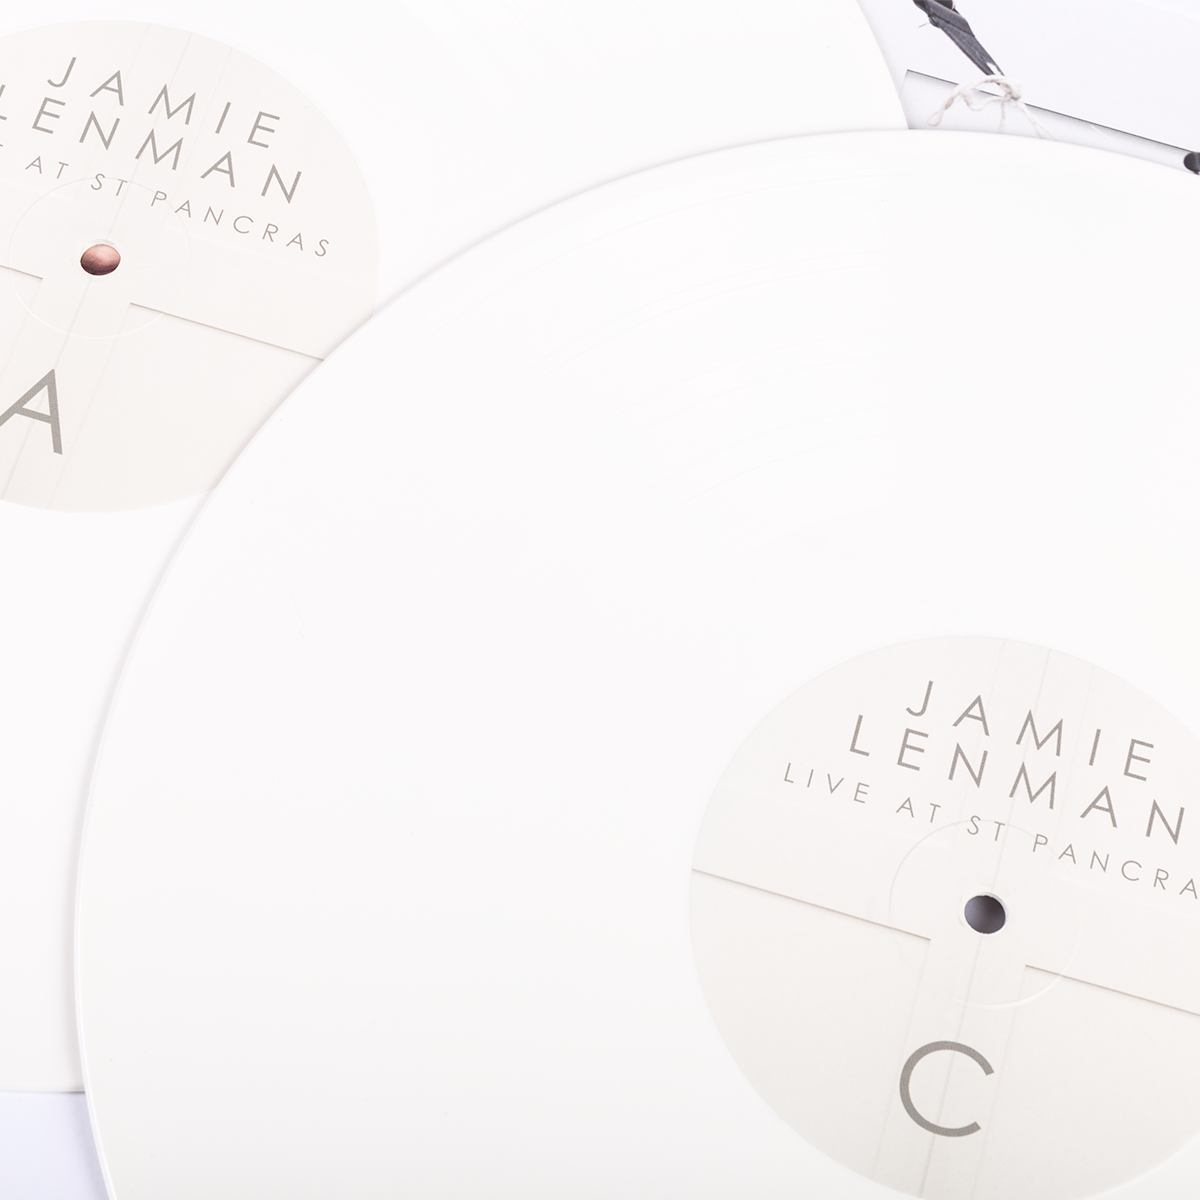 Jamie Lenman – Live at St Pancras